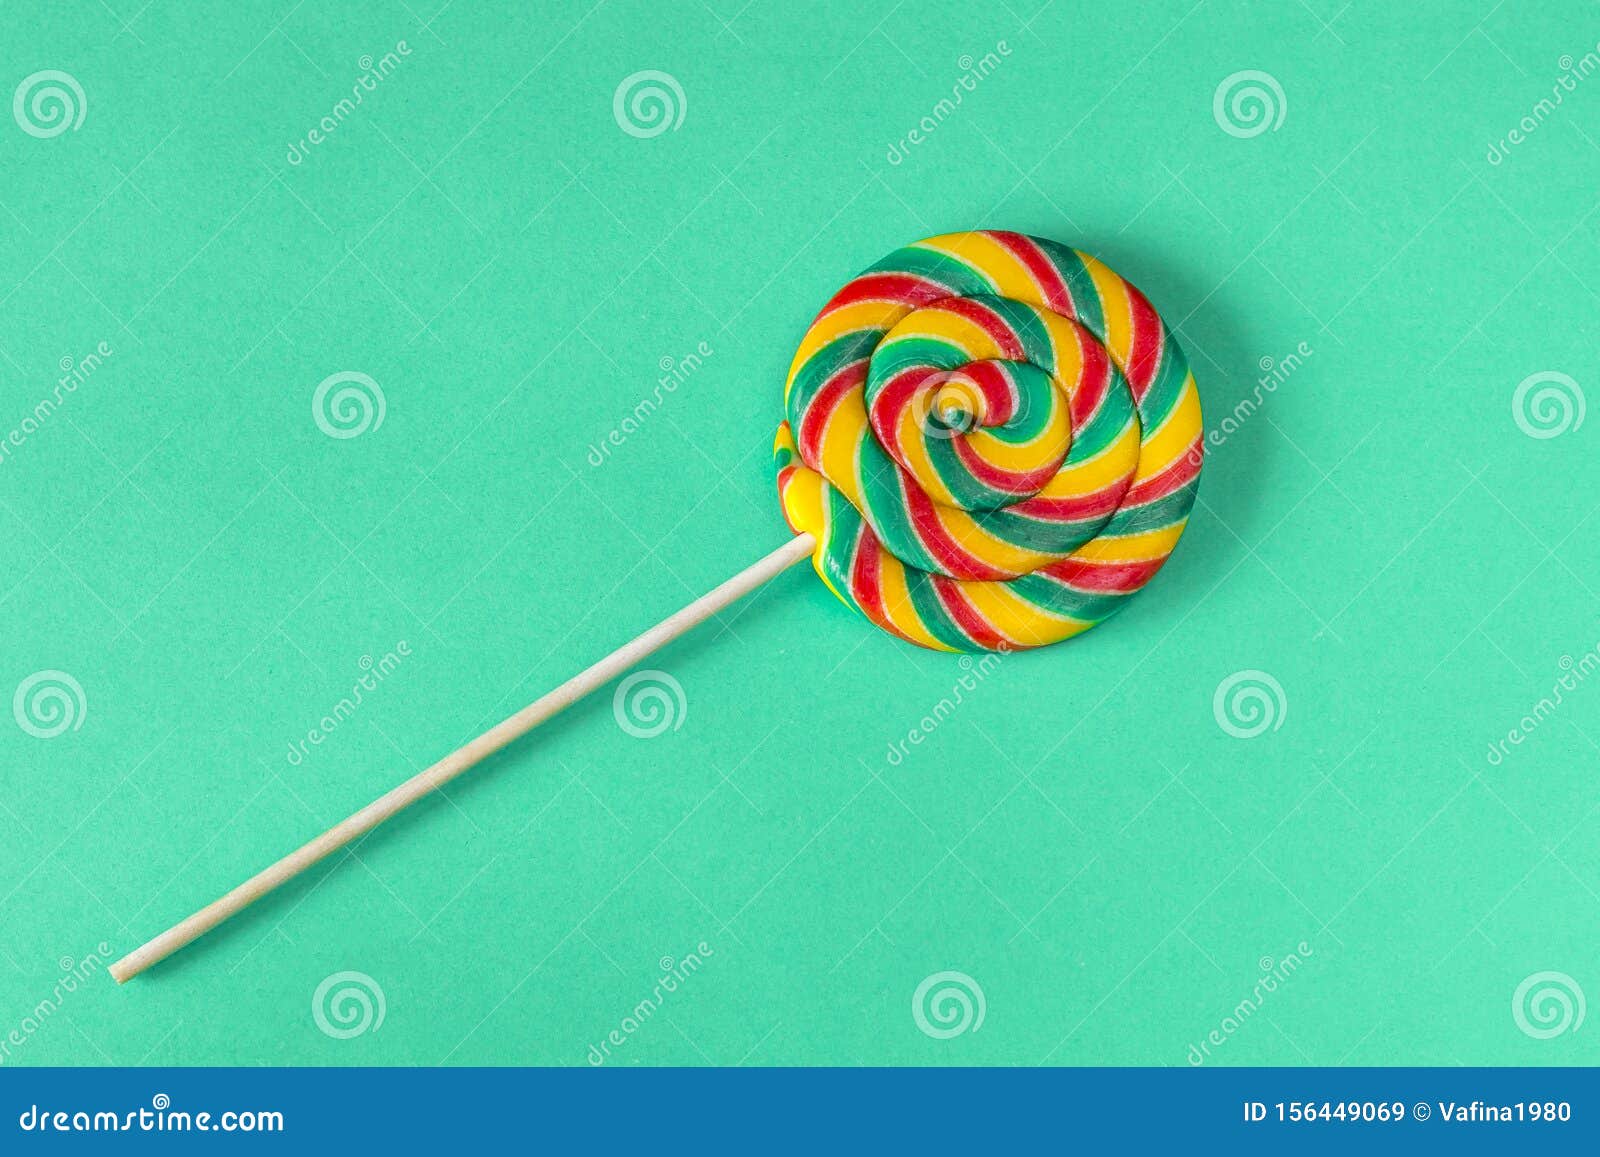 Multicolore Lollipop Swirl on Wooden Stick on a Green Background Stock ...